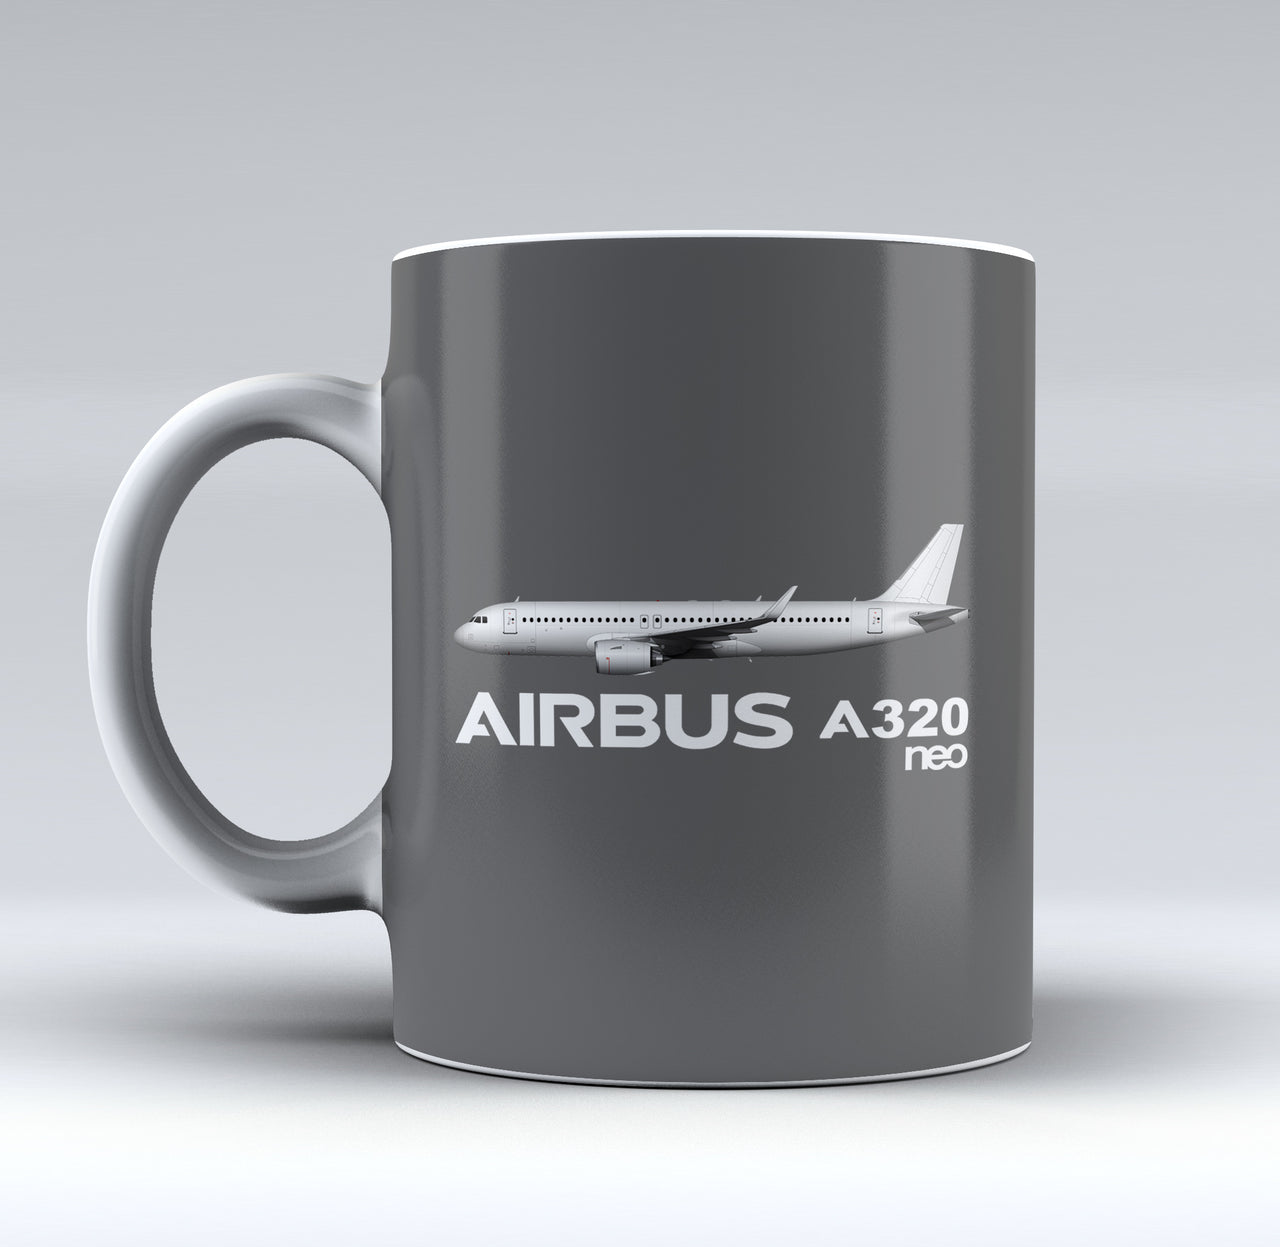 The Airbus A320Neo Designed Mugs